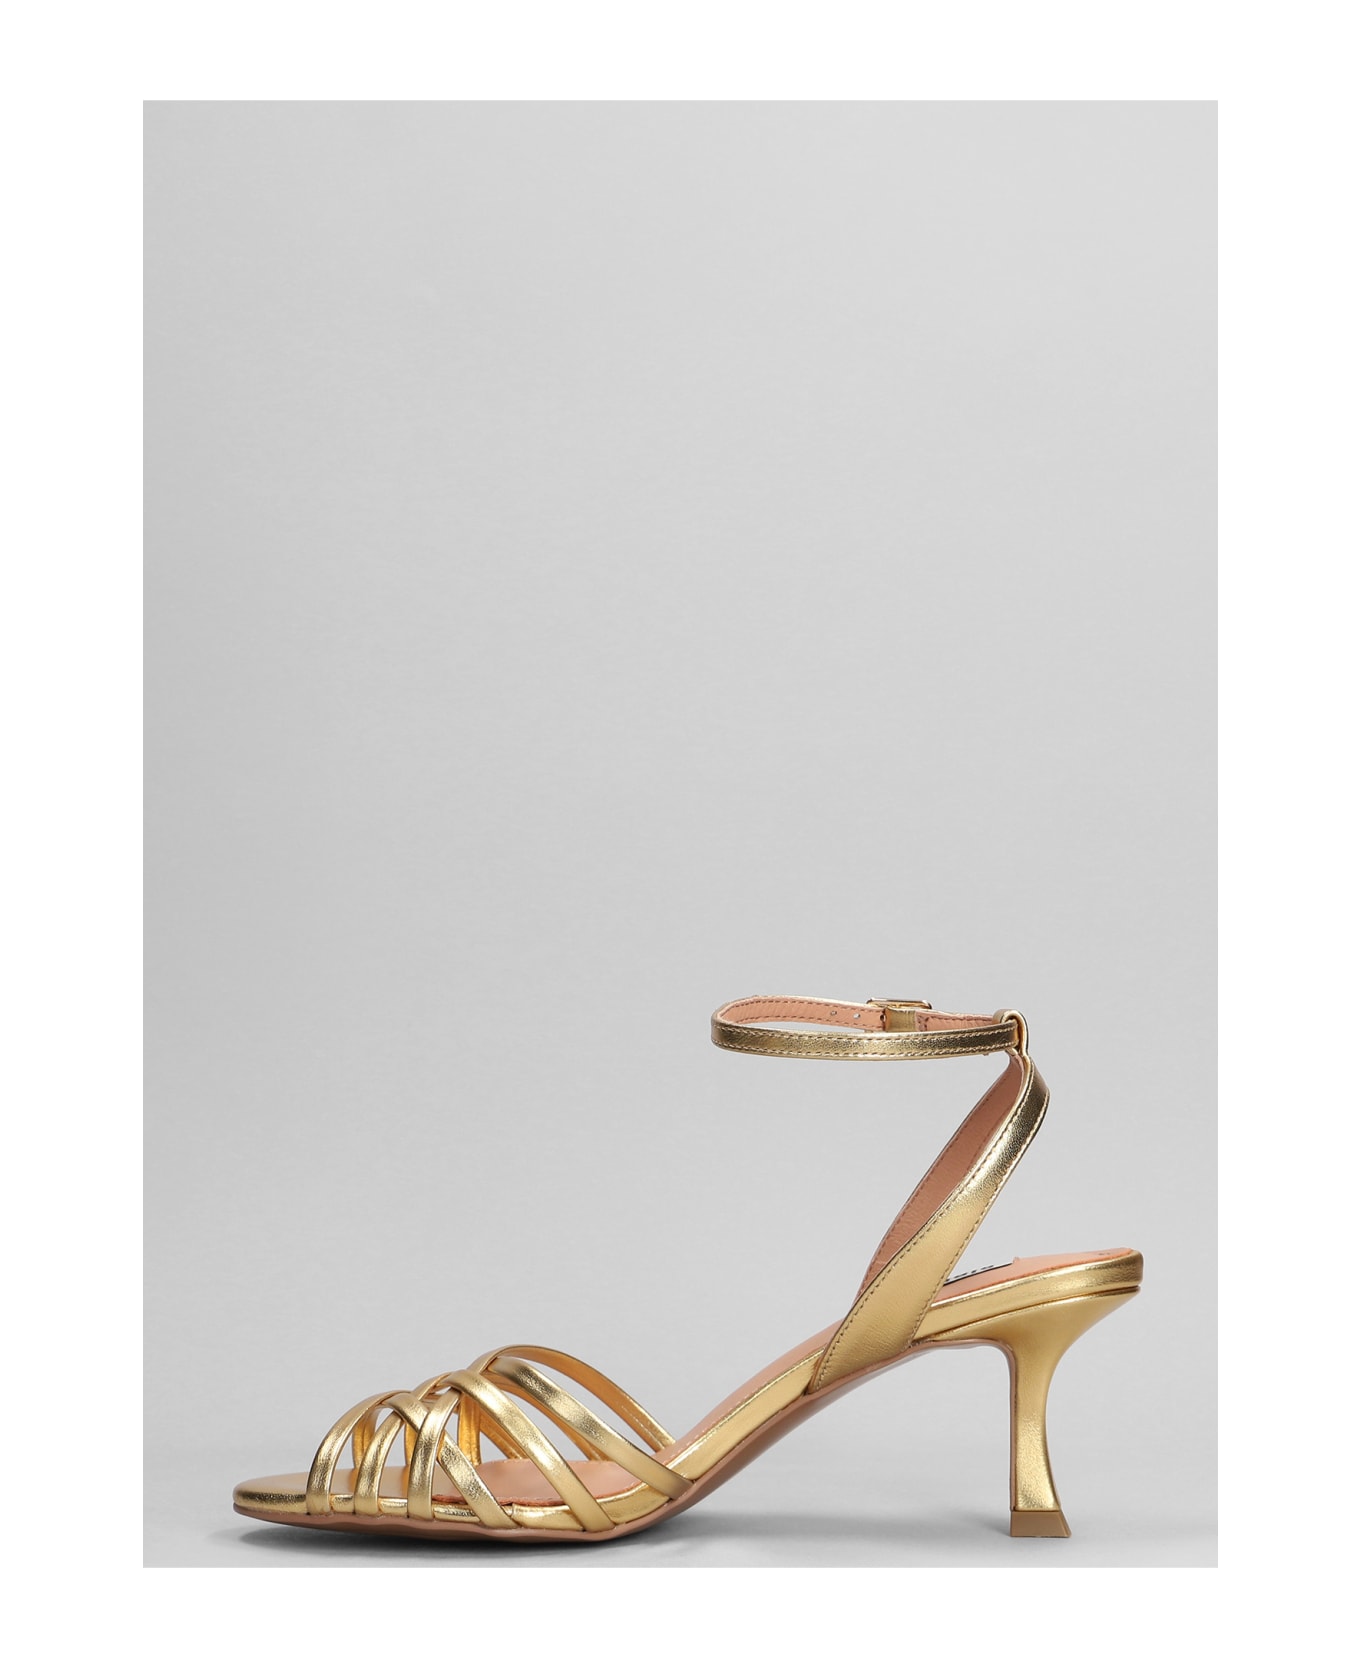 Bibi Lou Kassia 65 Sandals In Gold Leather - gold サンダル